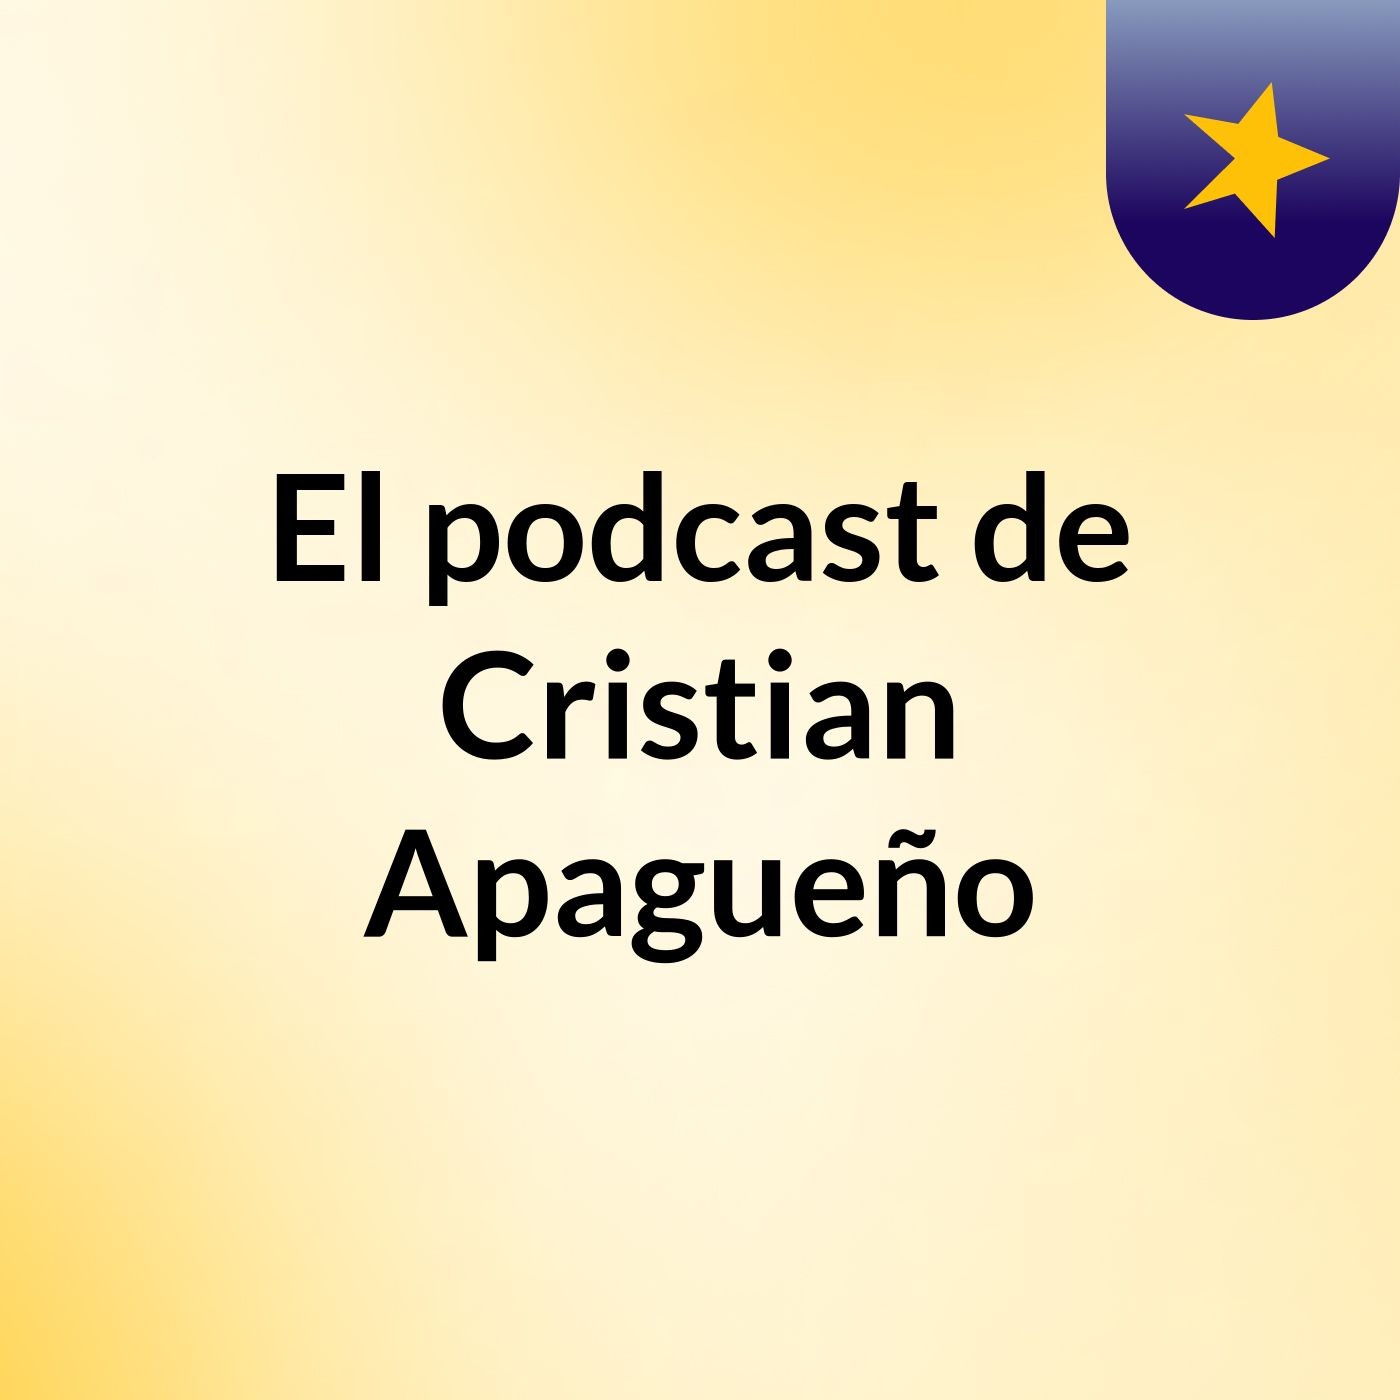 Episodio 6 - El podcast de Cristian Apagueño